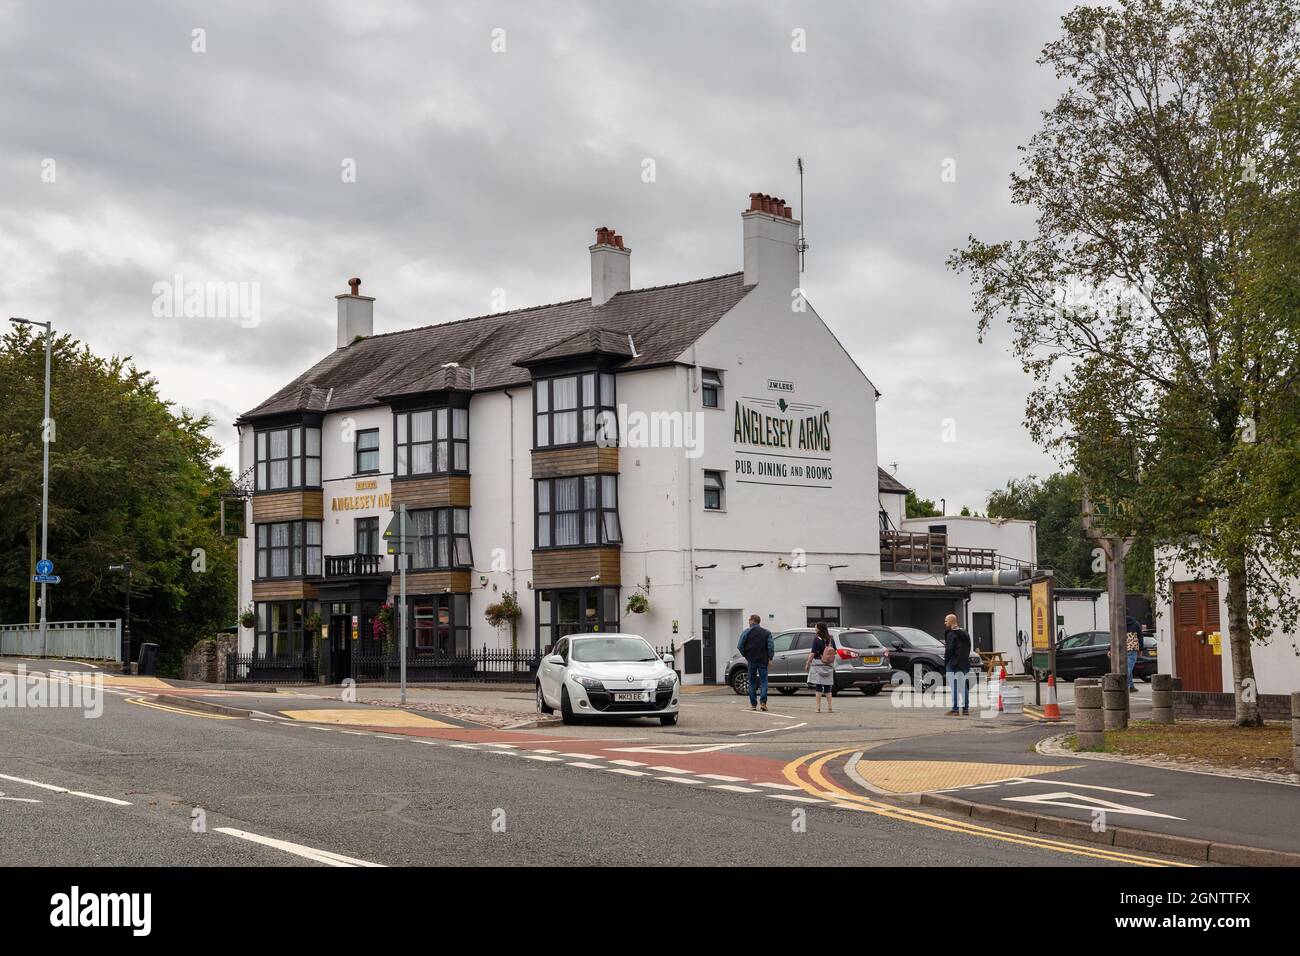 Menai Bridge, Wales - September 12 2021: Anglesey Arms Pub, Hotel und Restaurant an der Mona Road. Stockfoto